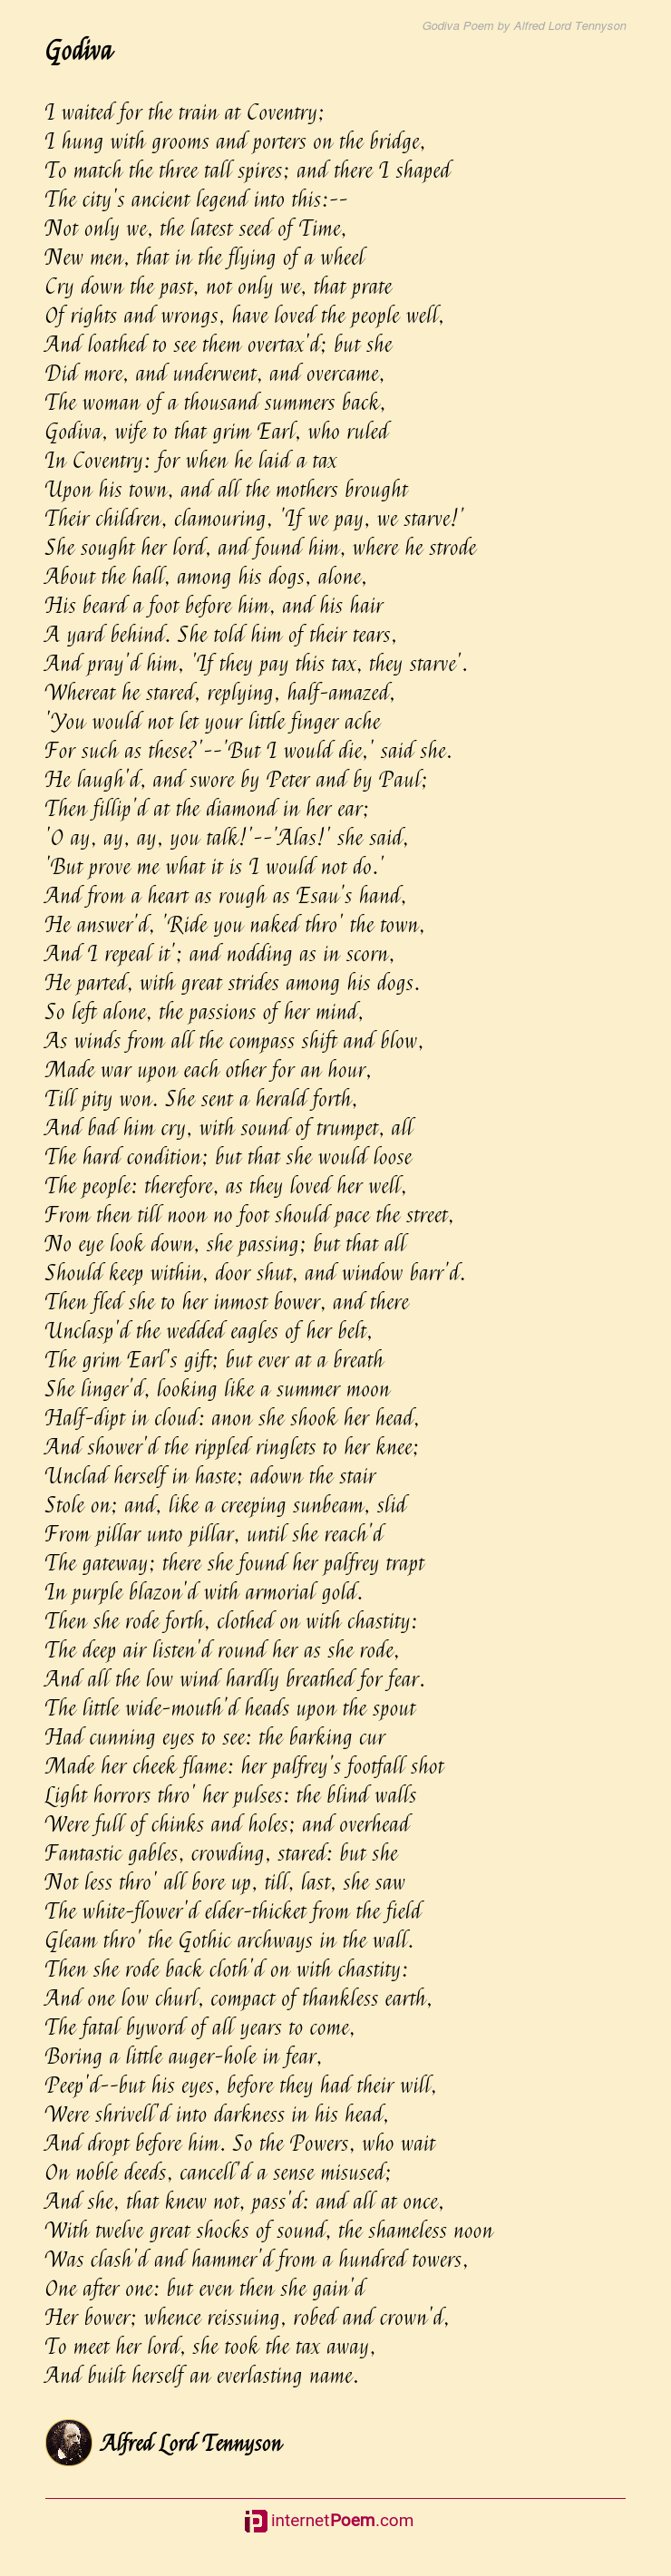 Godiva Poem by Alfred Lord Tennyson